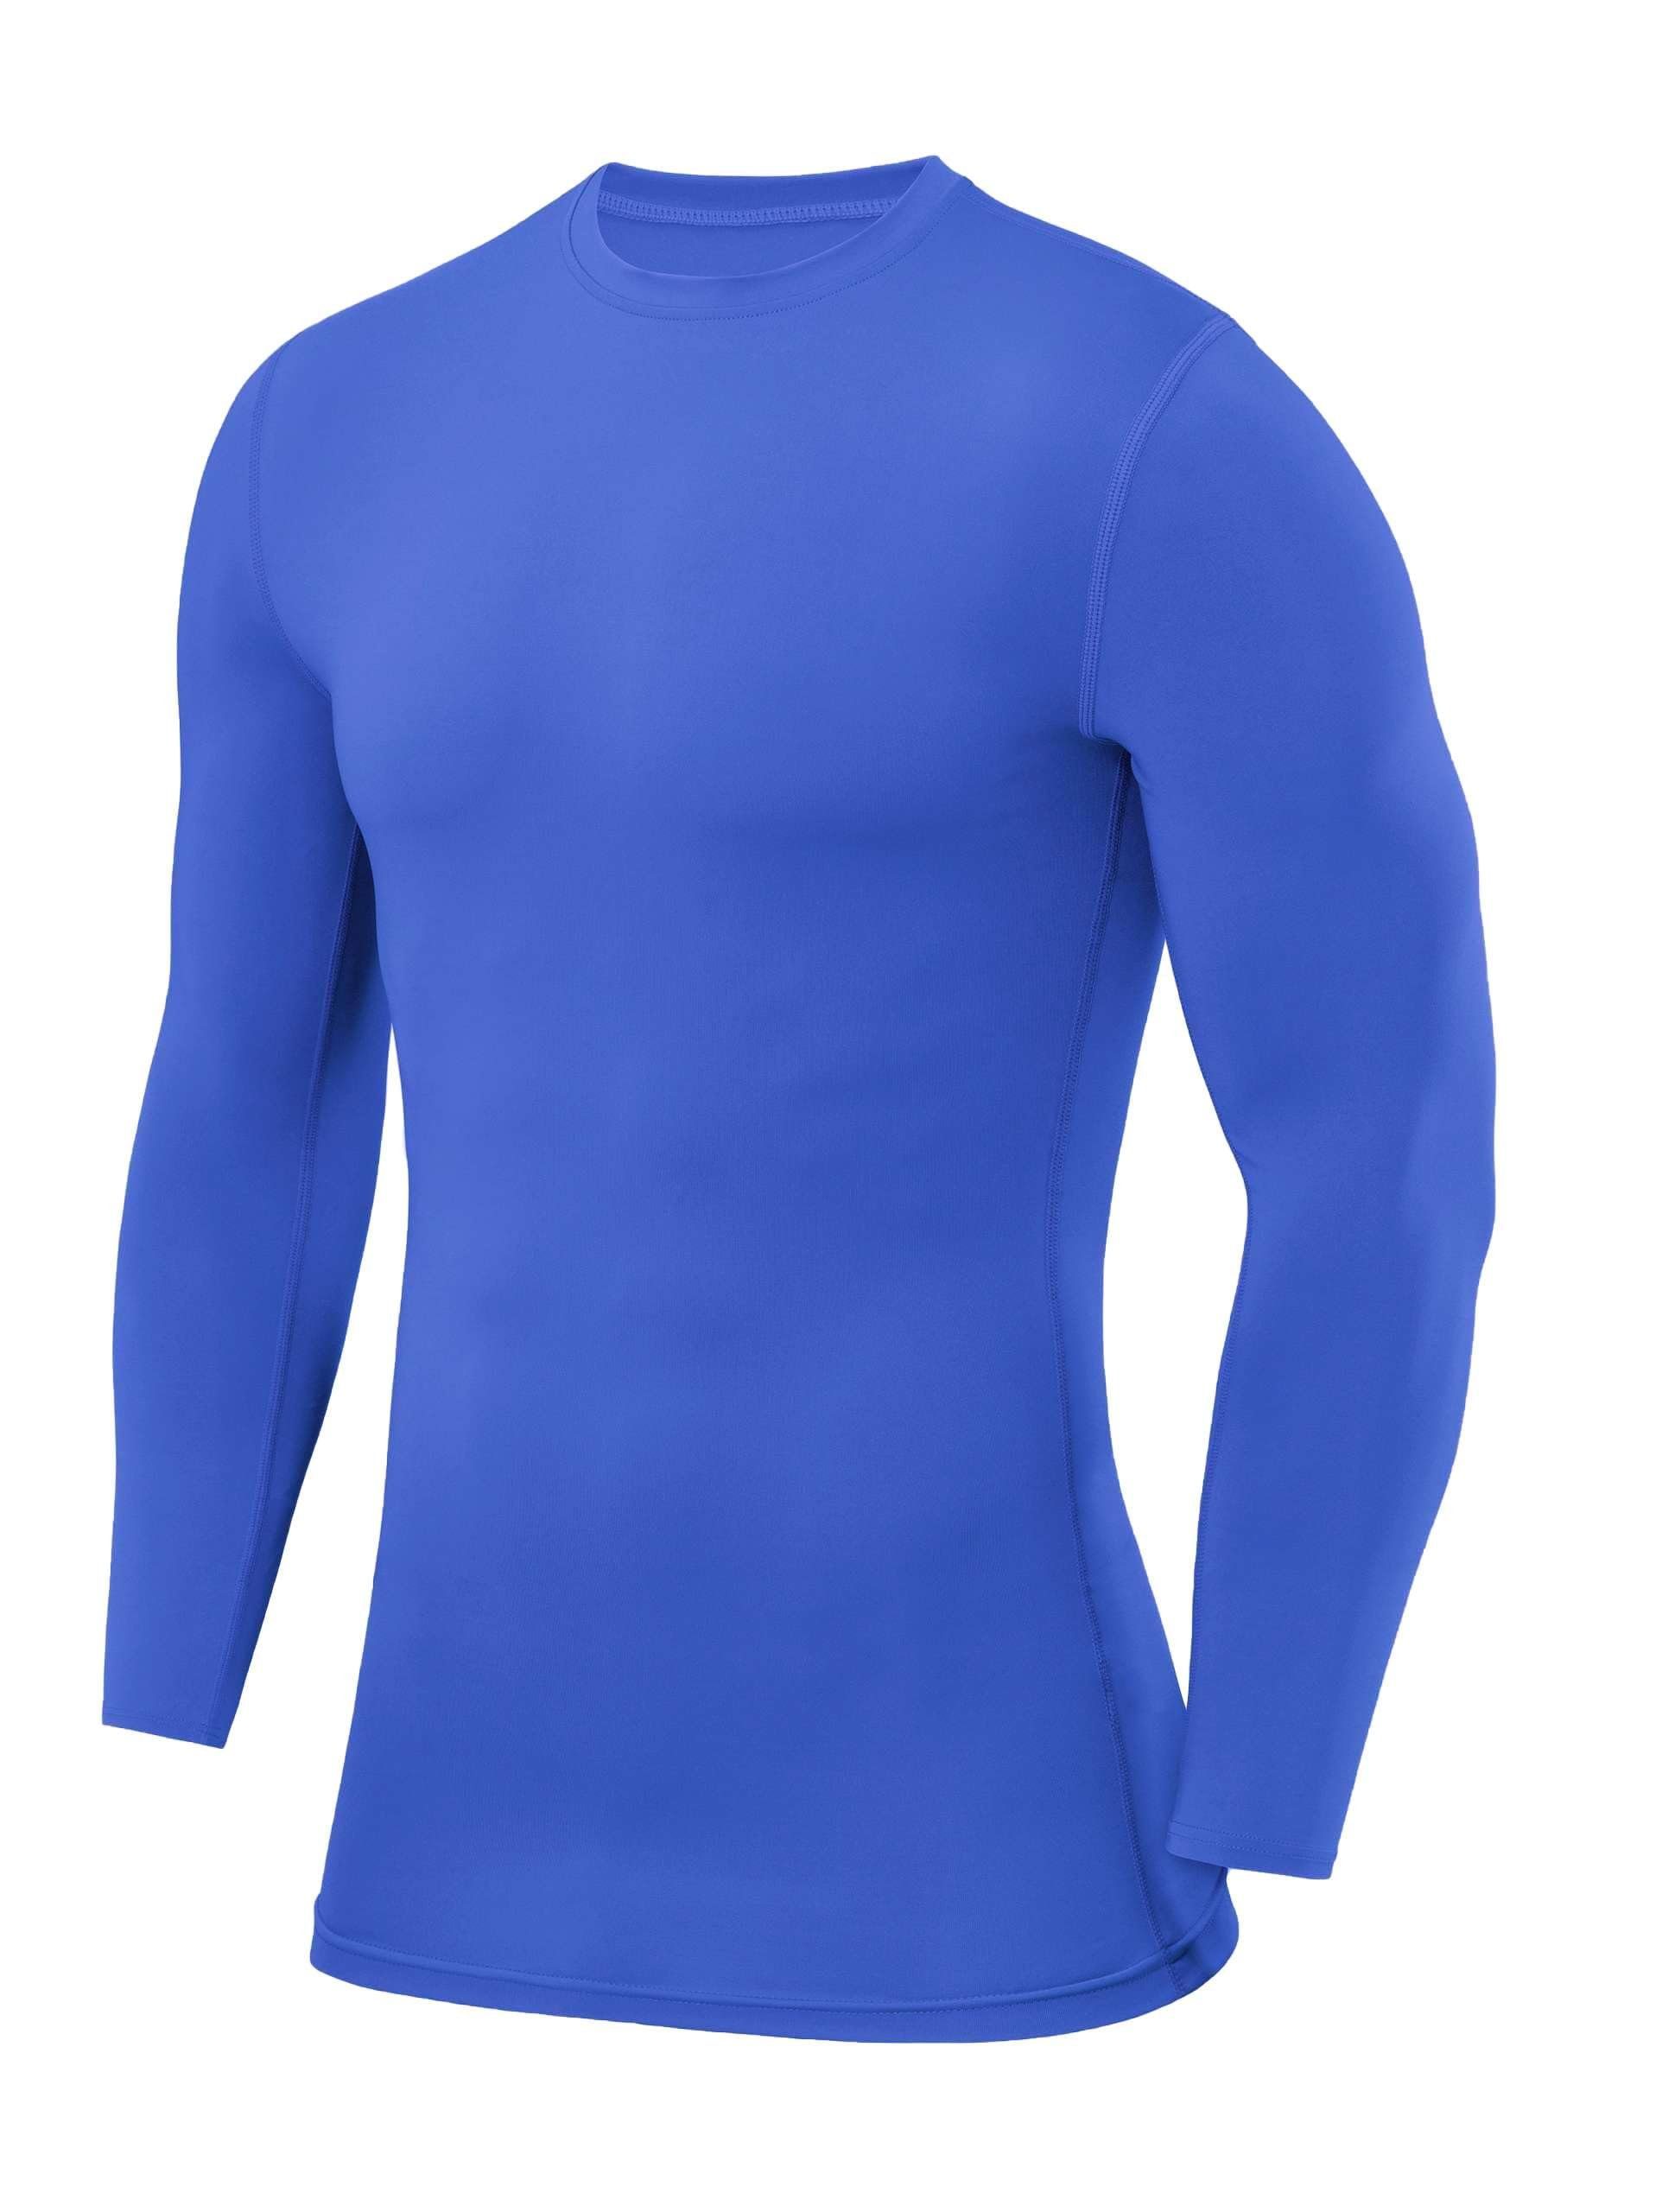 POWERLAYER Langarmshirt PowerLayer Kompressions Shirt Herren Rundhalsausschnitt Blau XS